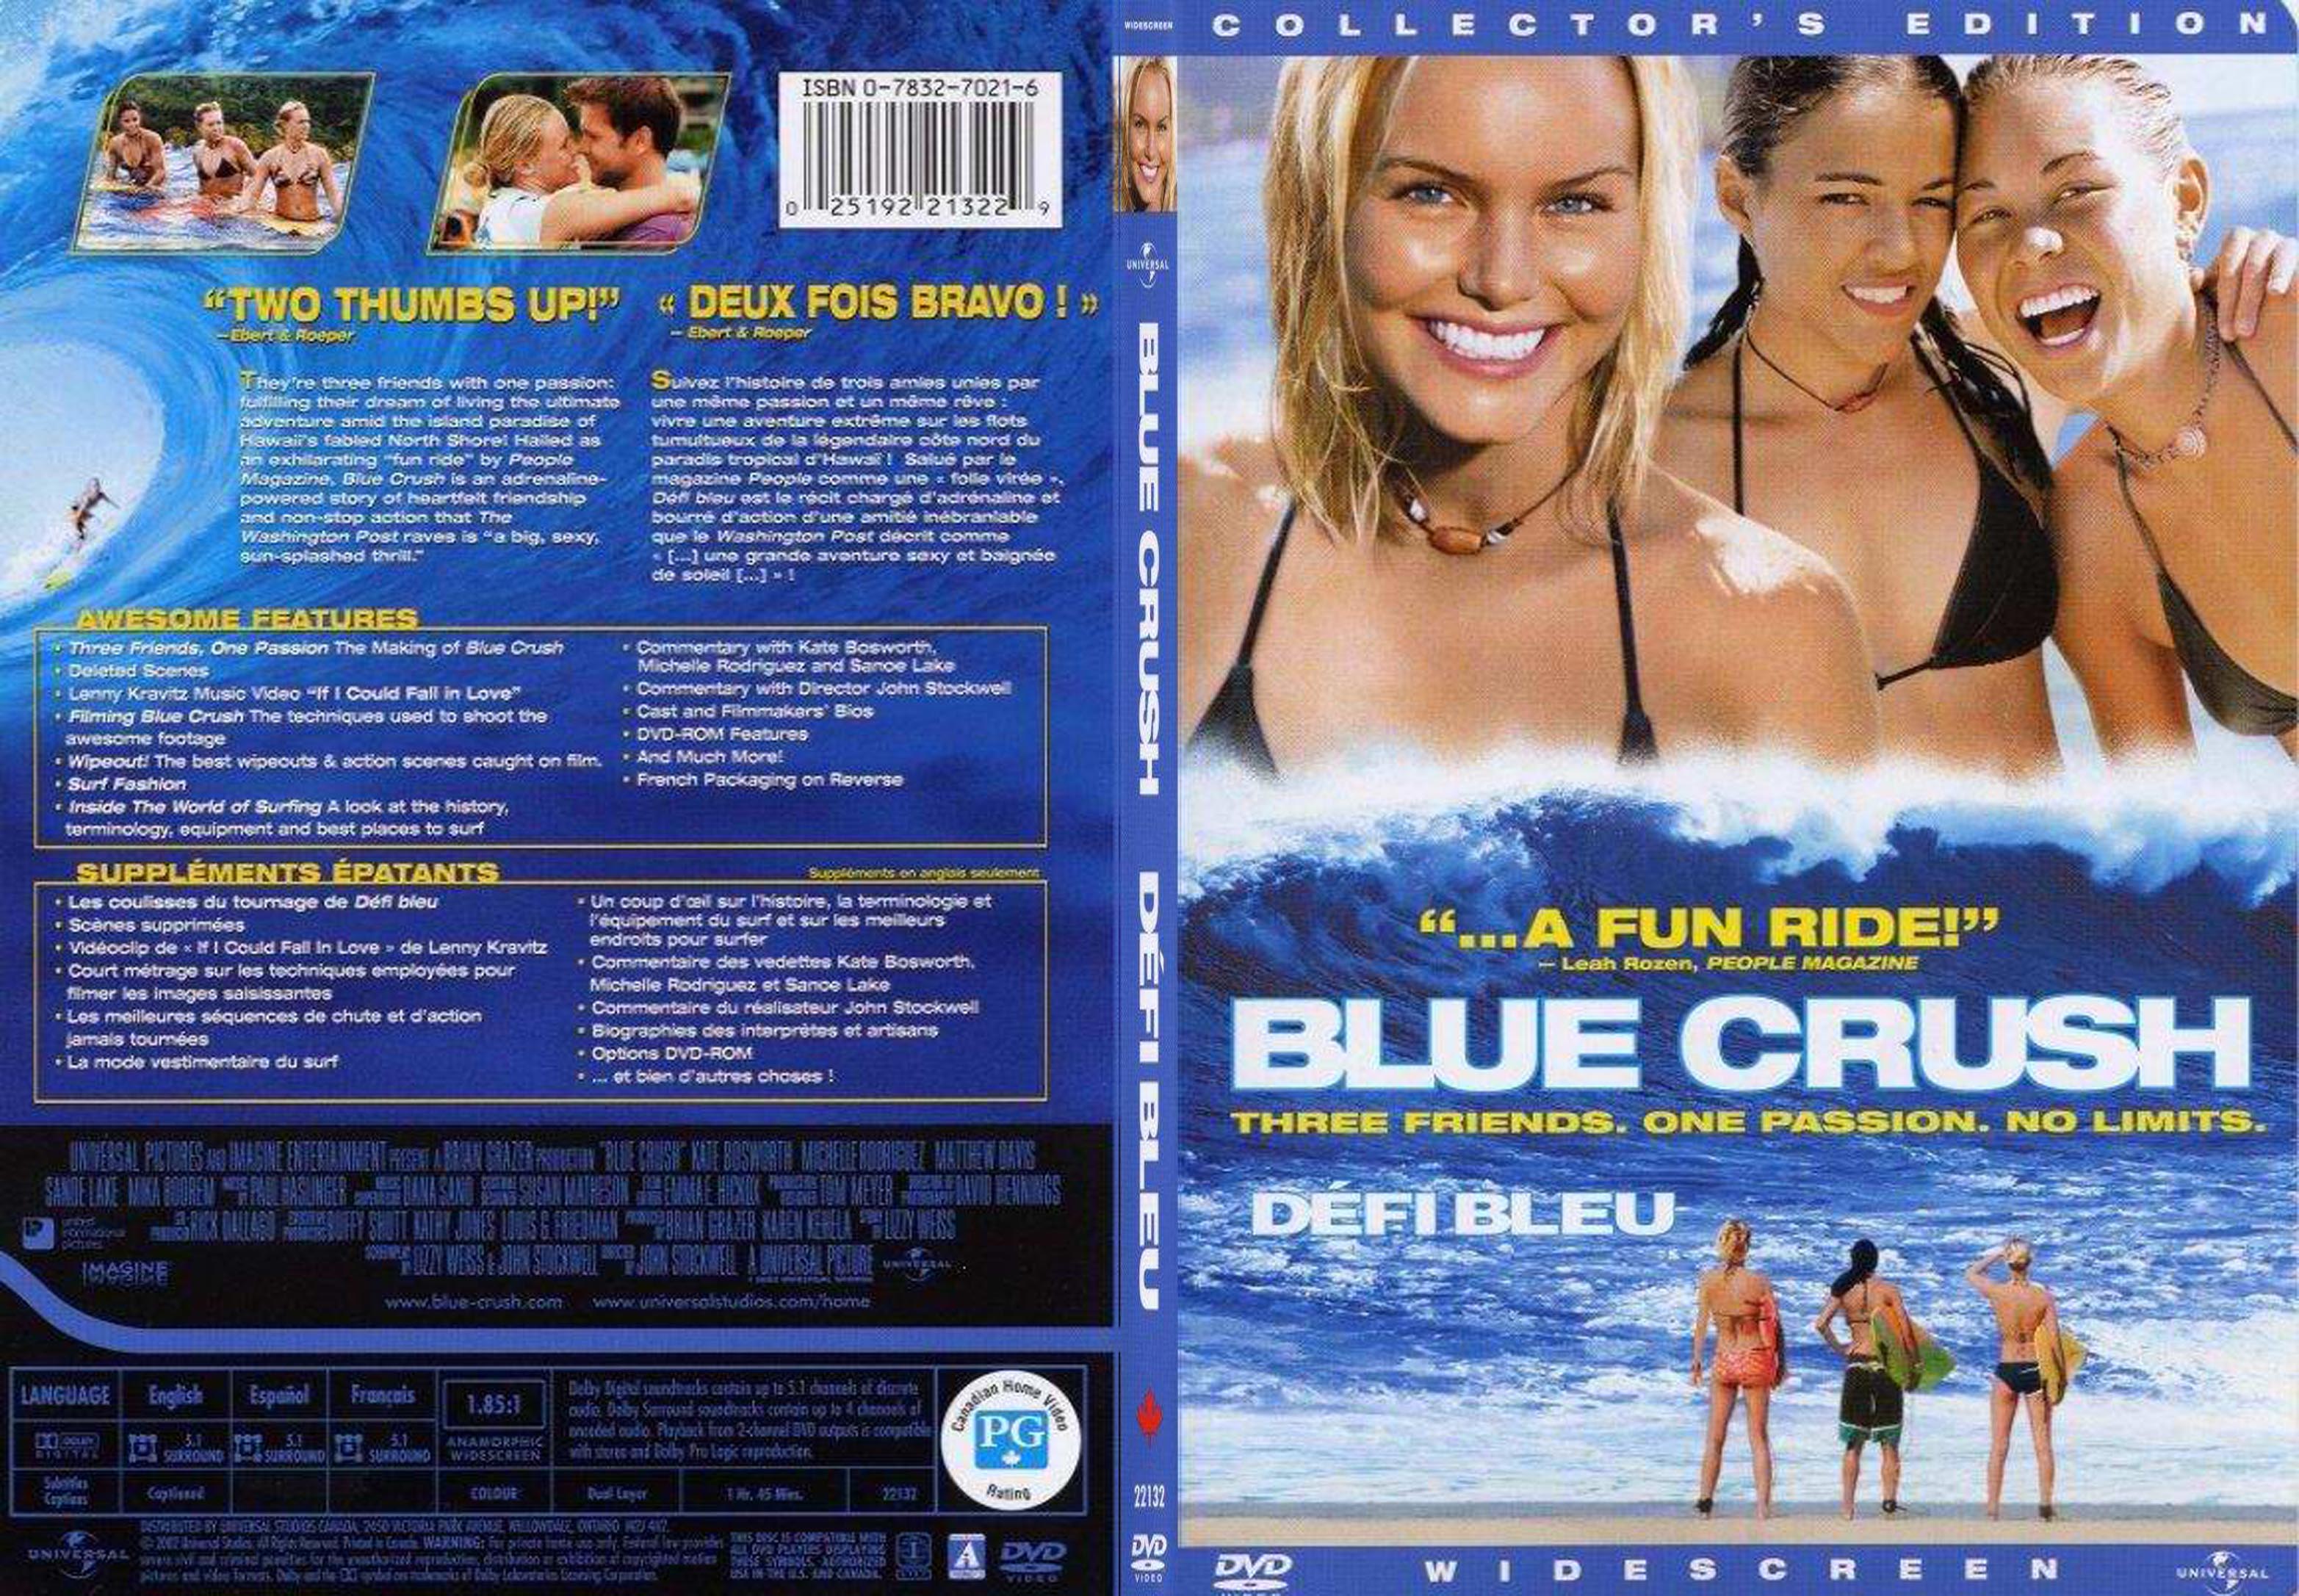 Jaquette DVD Blue crush - SLIM